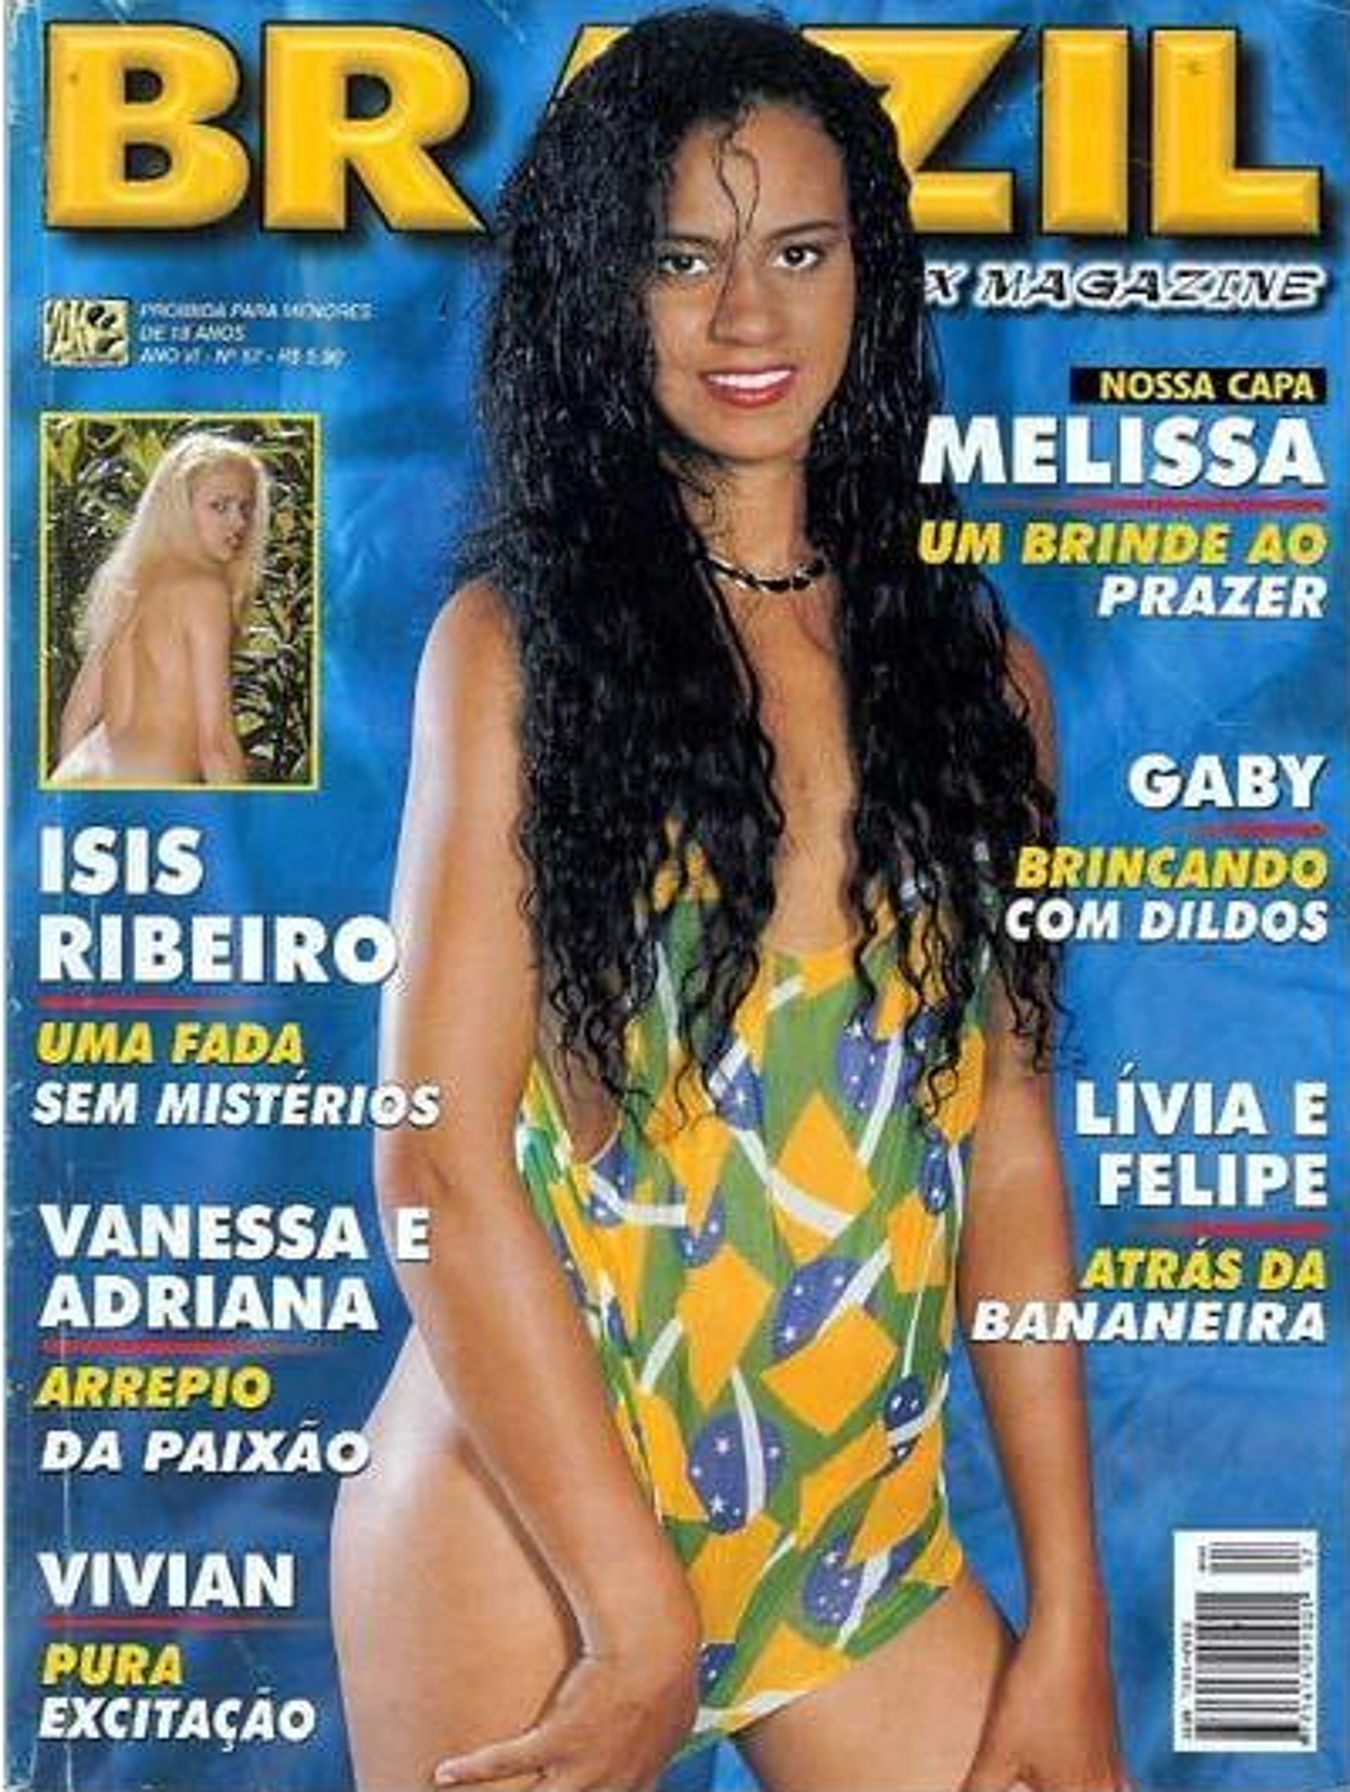 Cake recommendet fotos brazil sex magazine